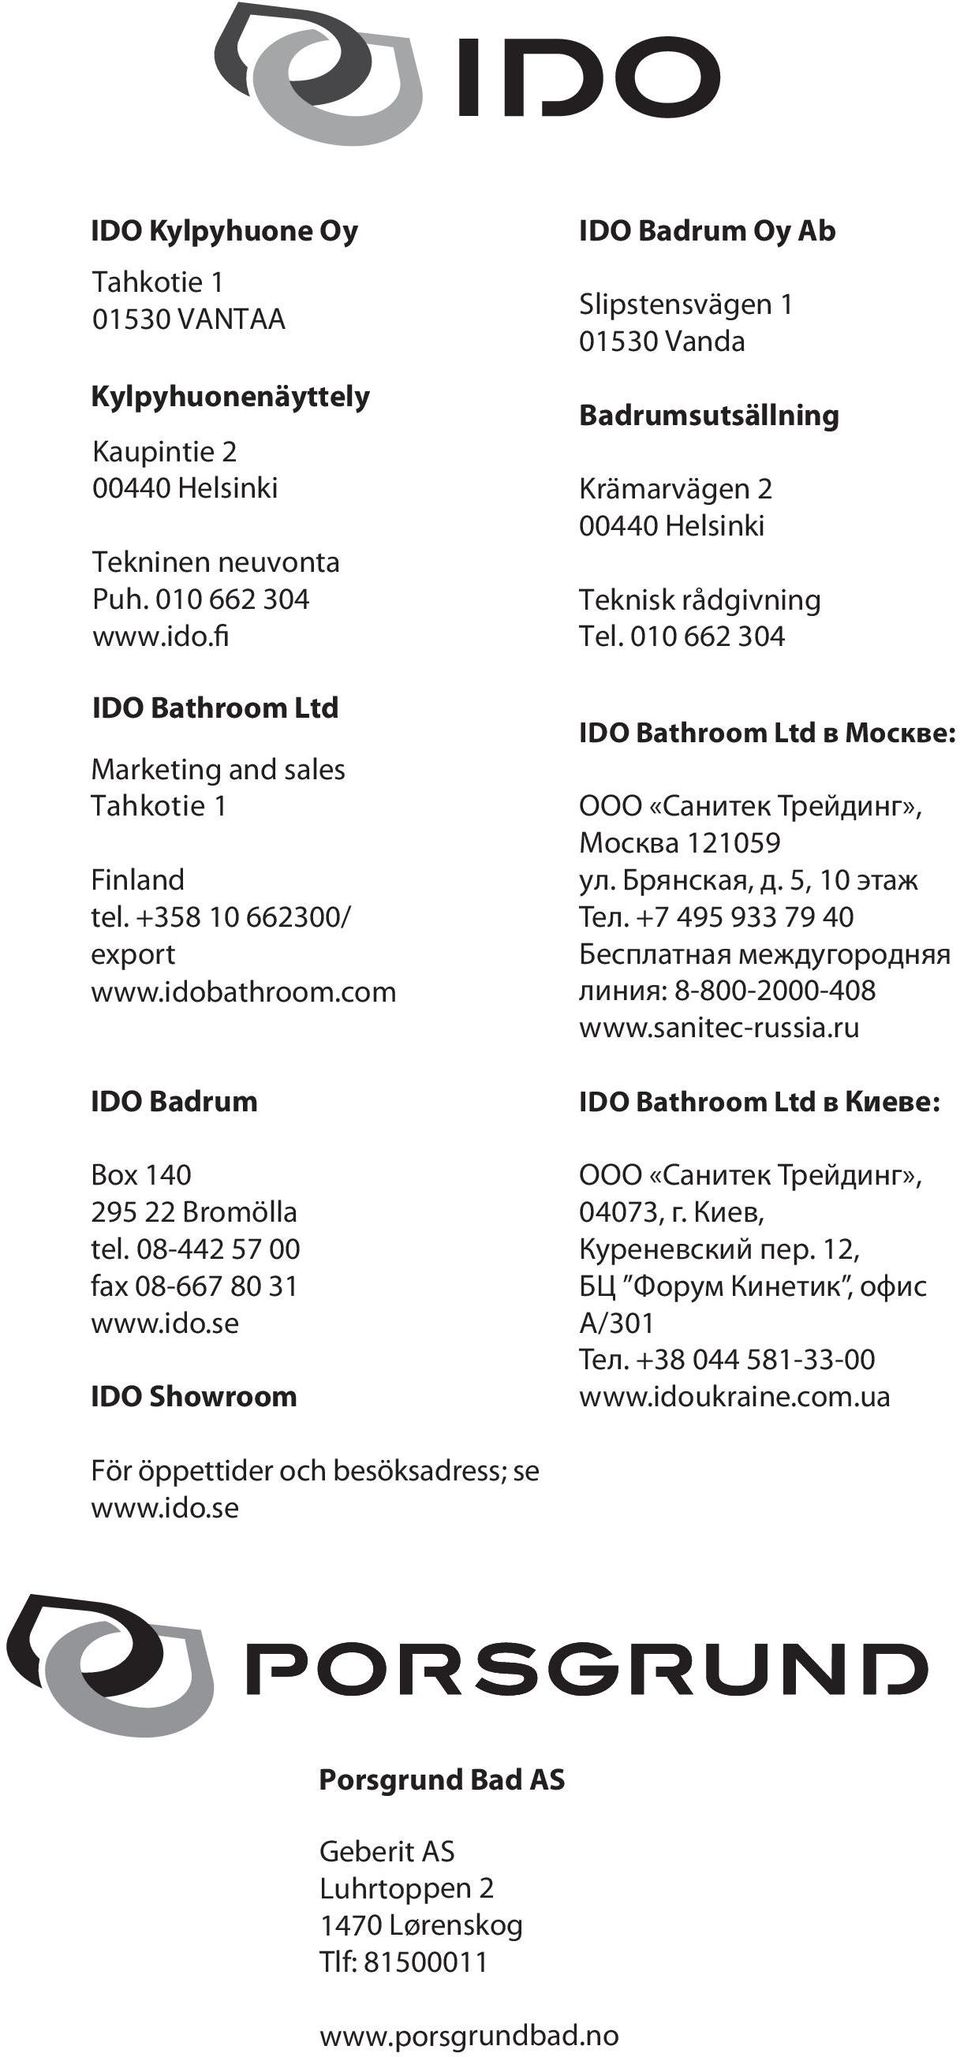 010 662 304 IDO Bathroom Ltd в Москве: ООО «Санитек Трейдинг», Москва 121059 ул. Брянская, д. 5, 10 этаж Тел. +7 495 933 79 40 Бесплатная междугородняя линия: 8-800-2000-408 www.sanitec-russia.